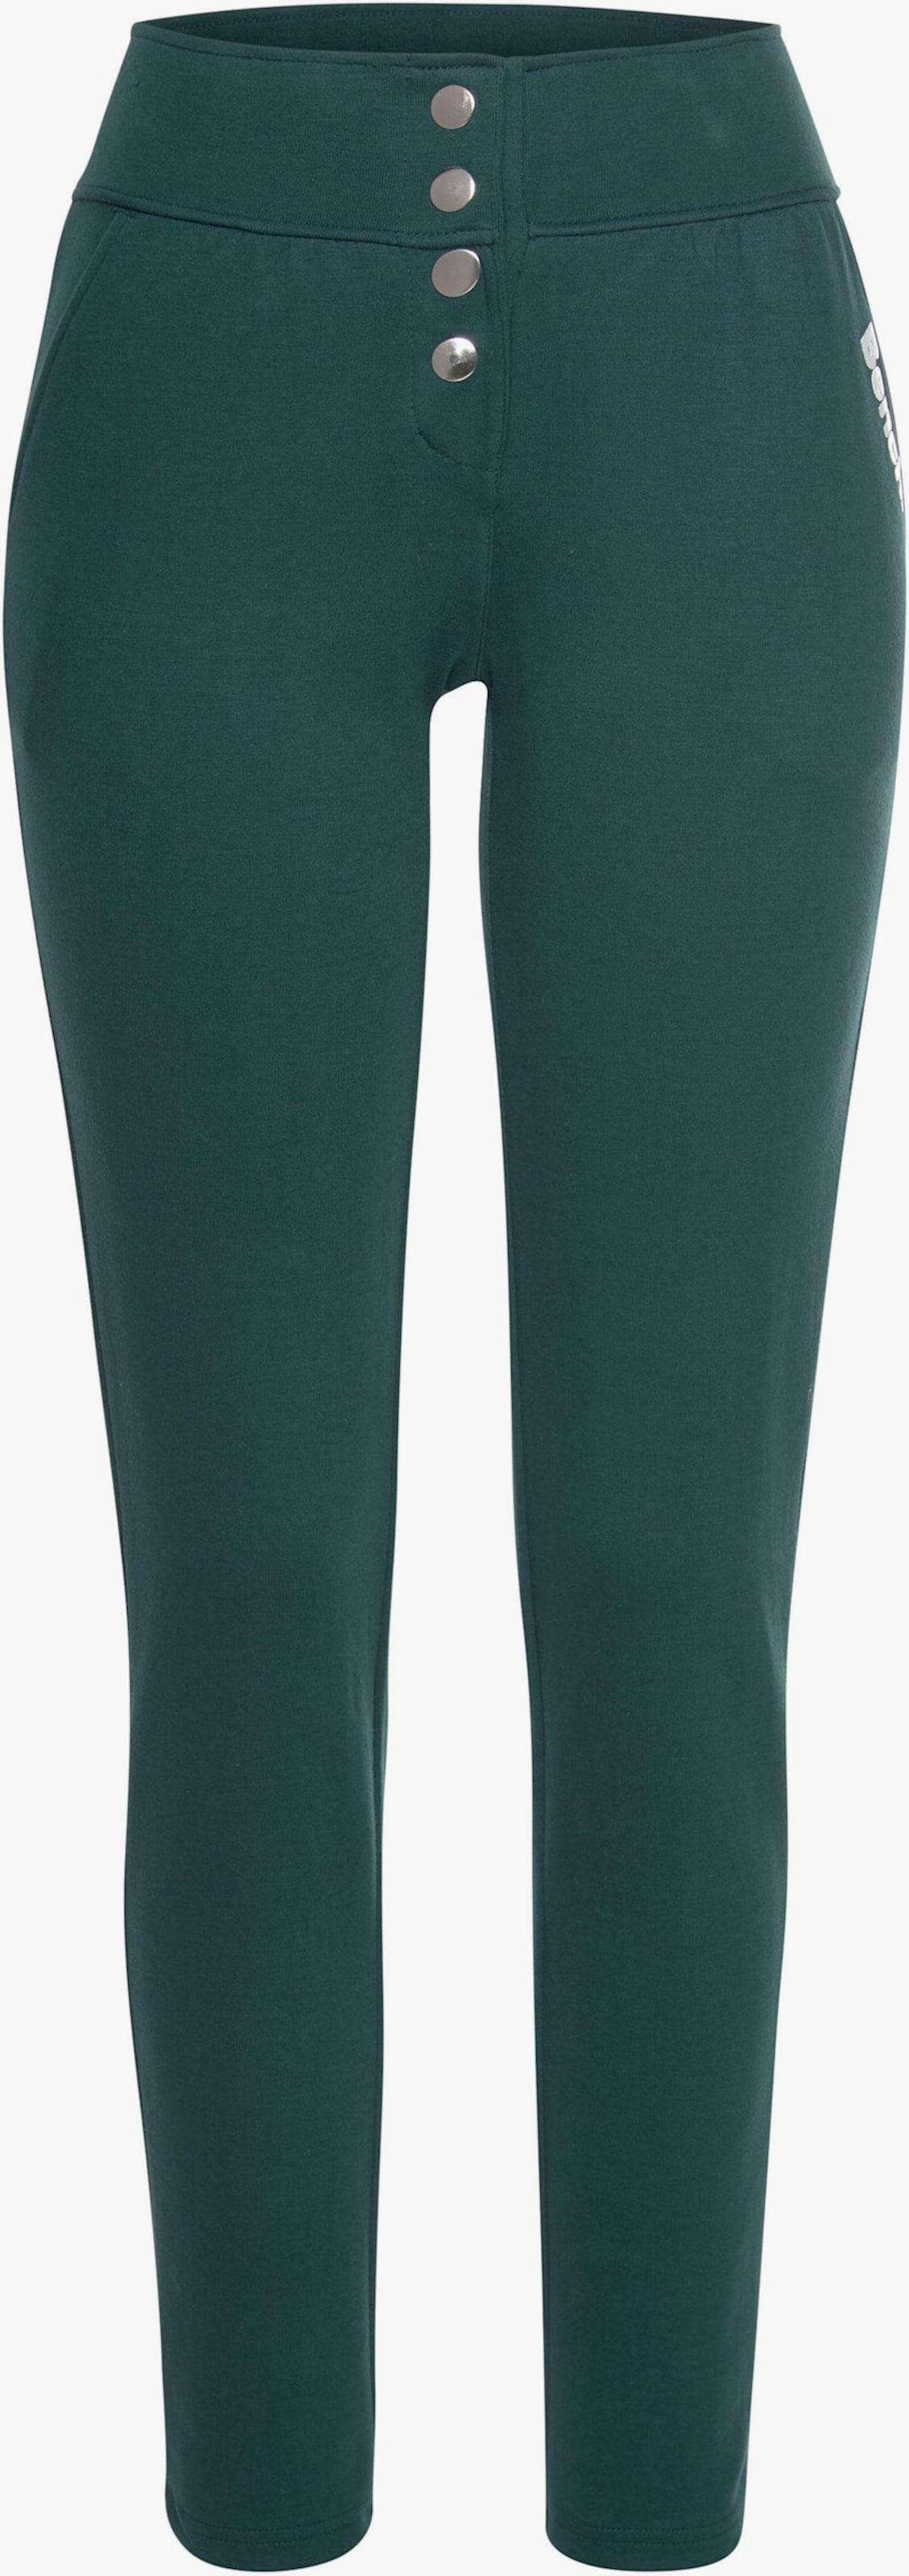 Pantalon molletonné - vert foncé